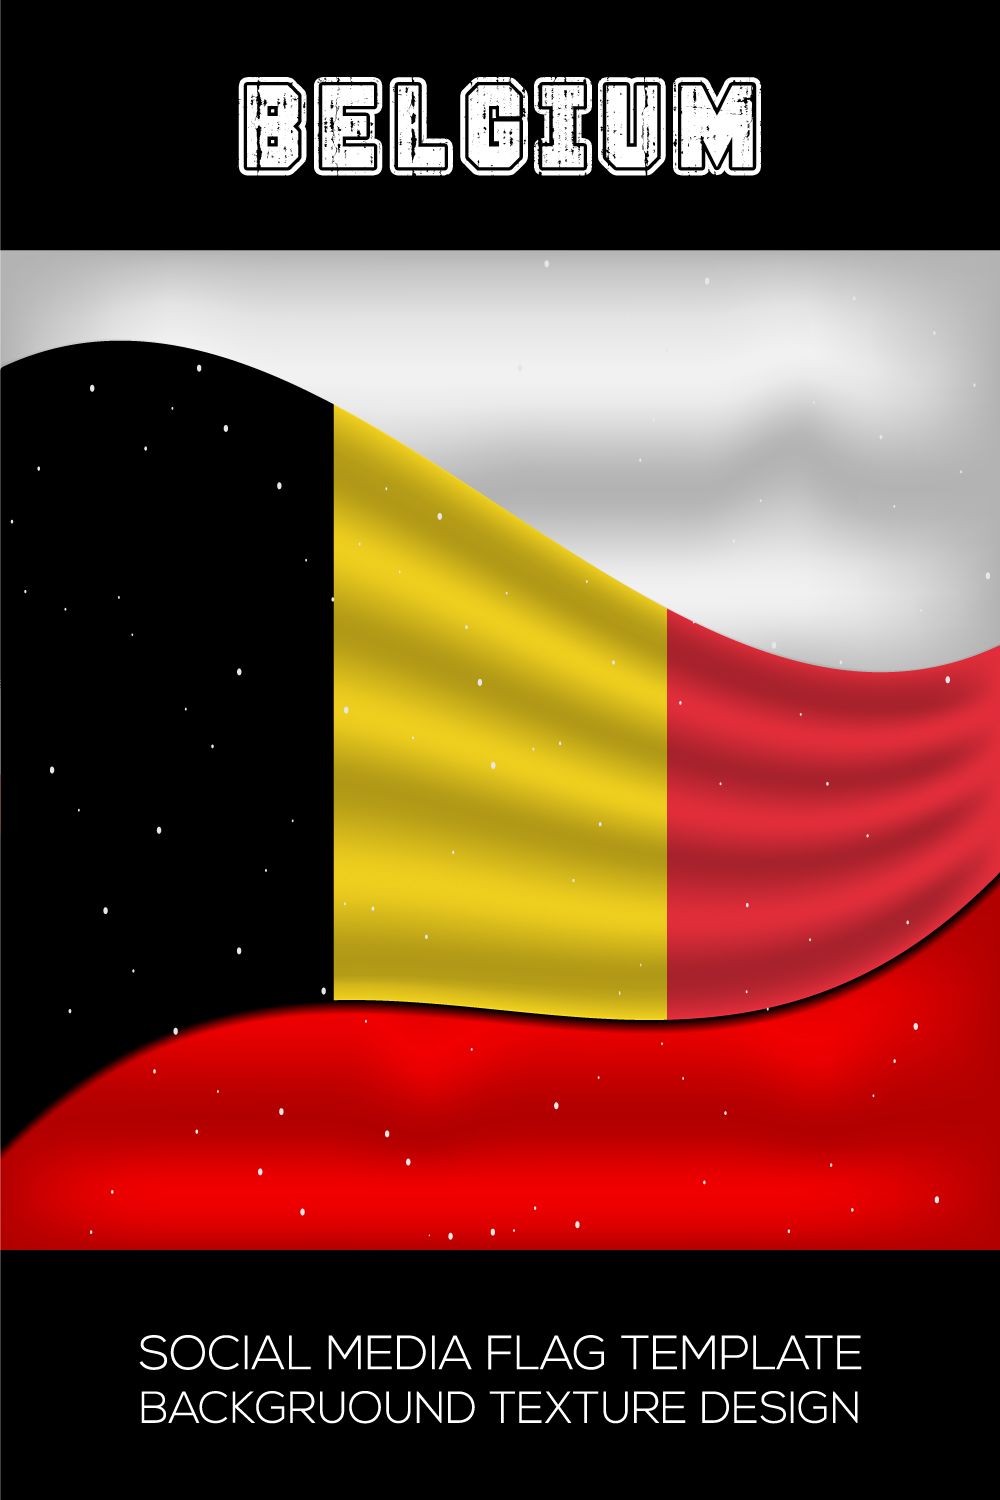 Enchanting image of the flag of Belgium.